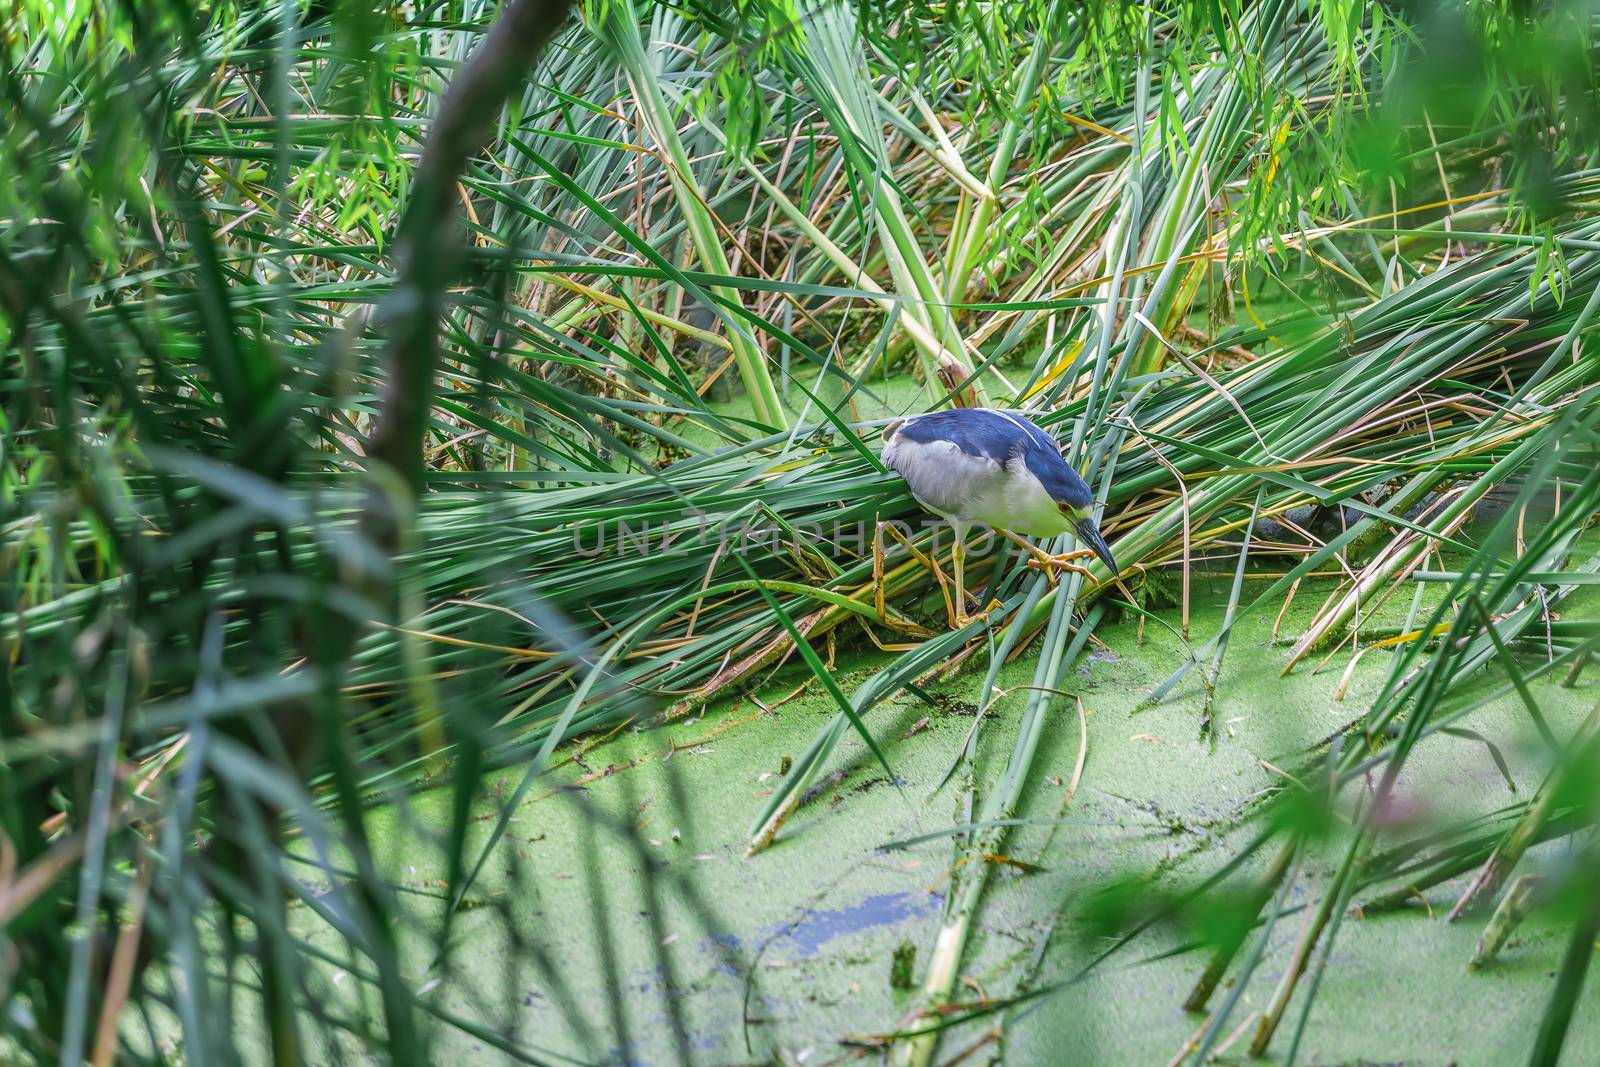 An amazing blue bird by petkolophoto